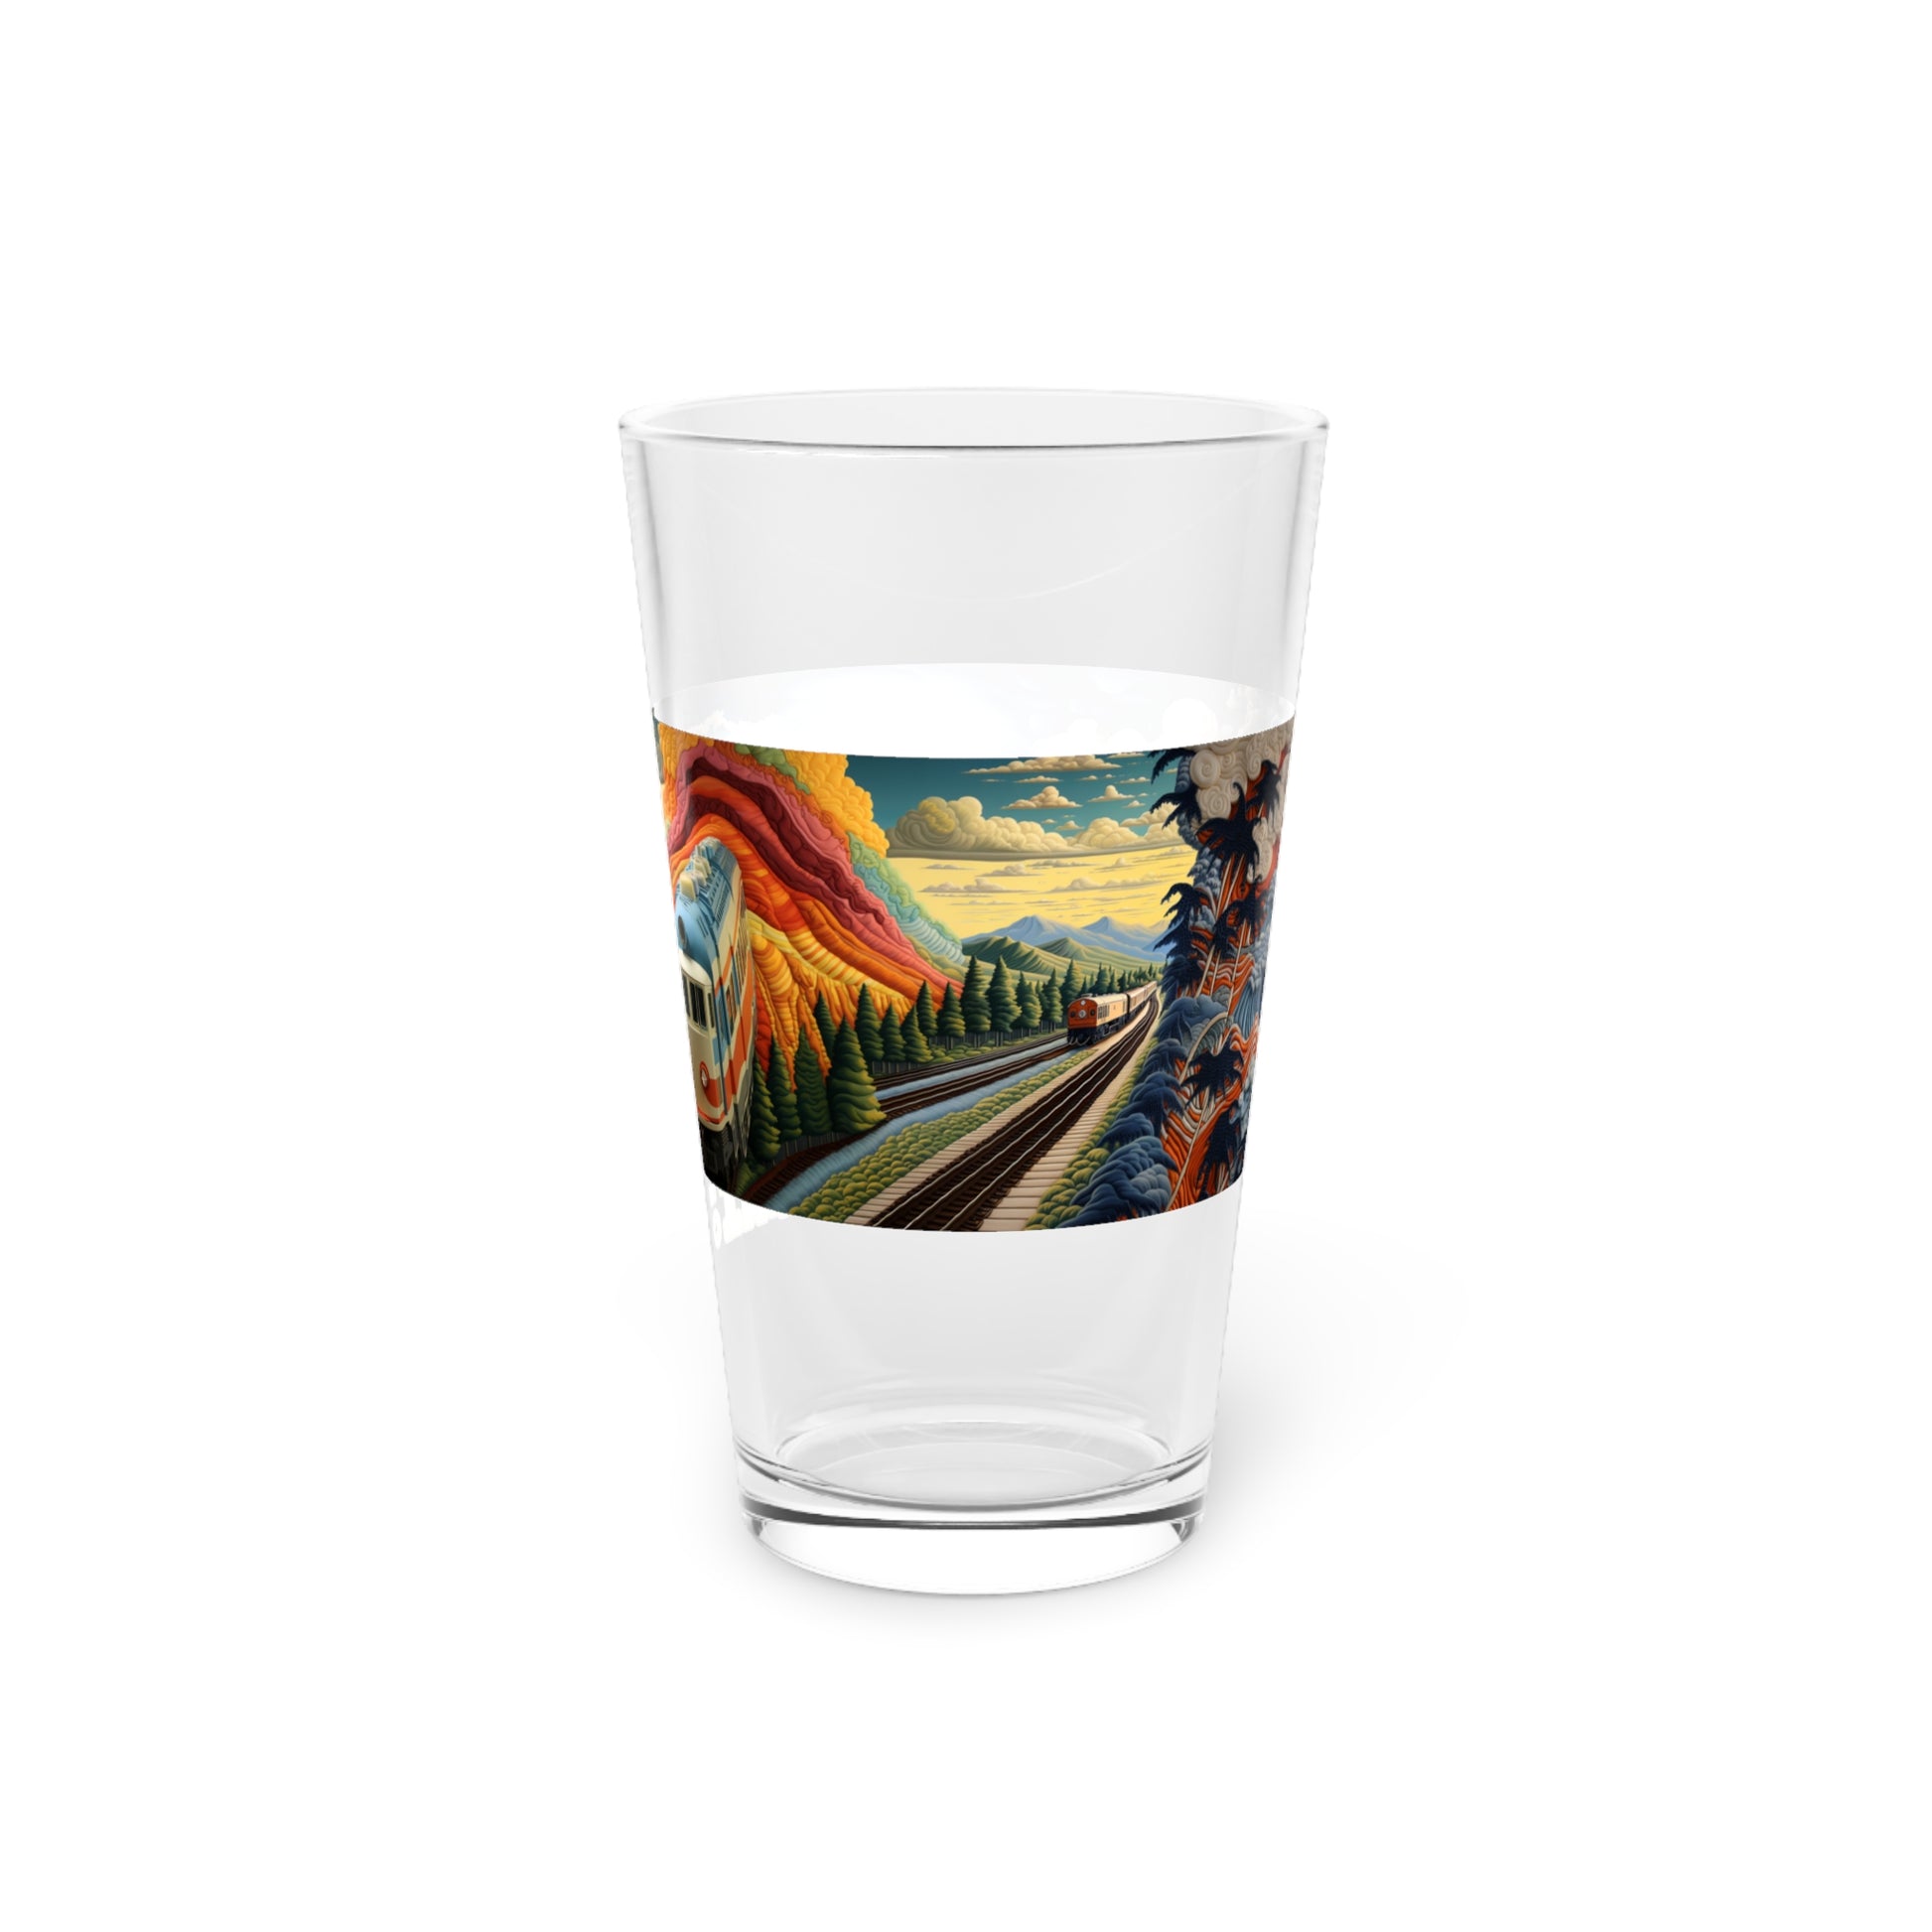 16oz Glass with Vibrant Train Art - Stashbox Train Collection